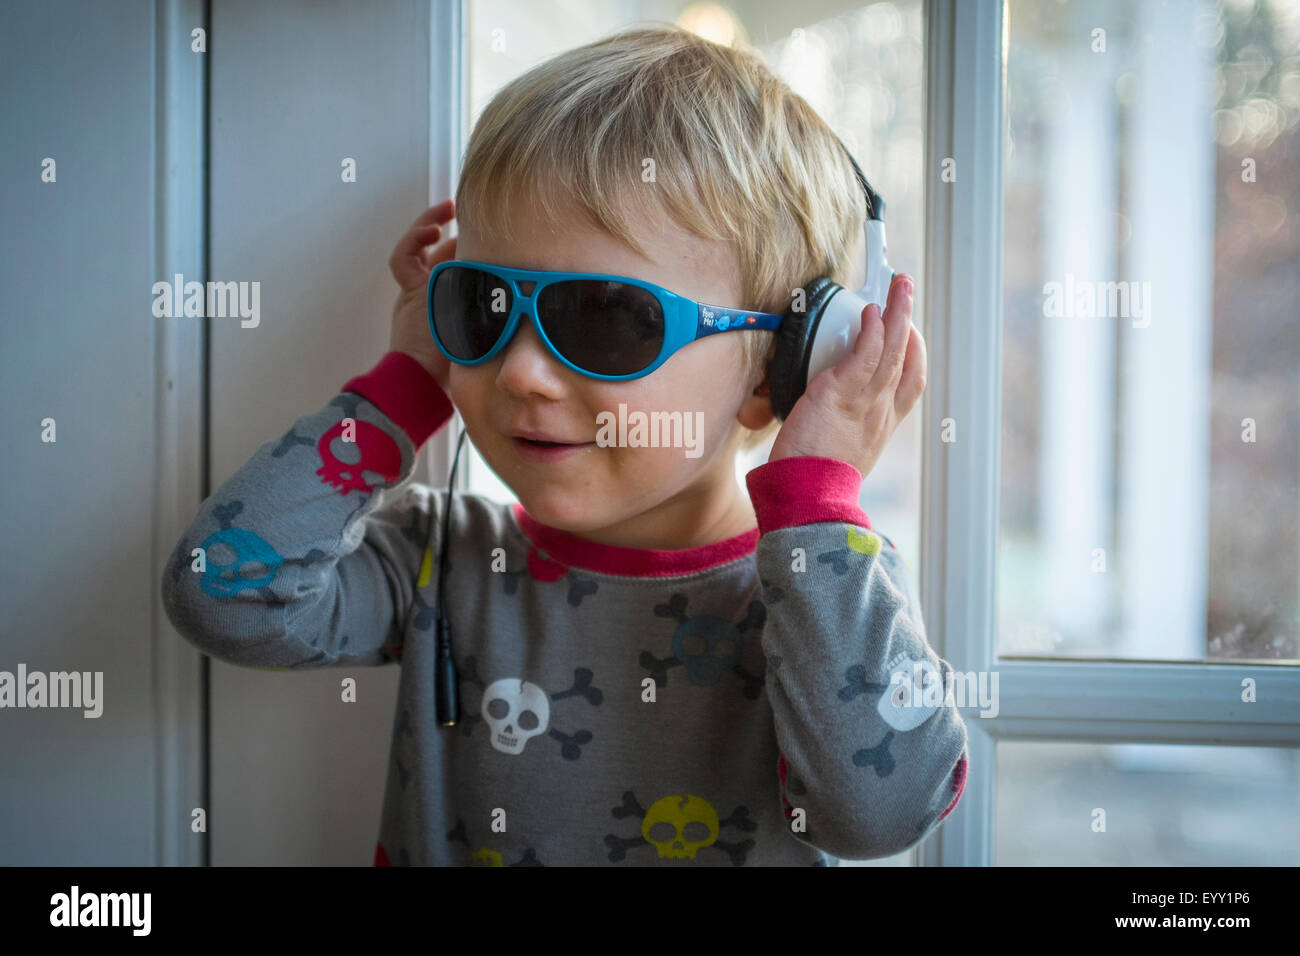 Caucasian boy wearing headphones and sunglasses indoors Stock Photo